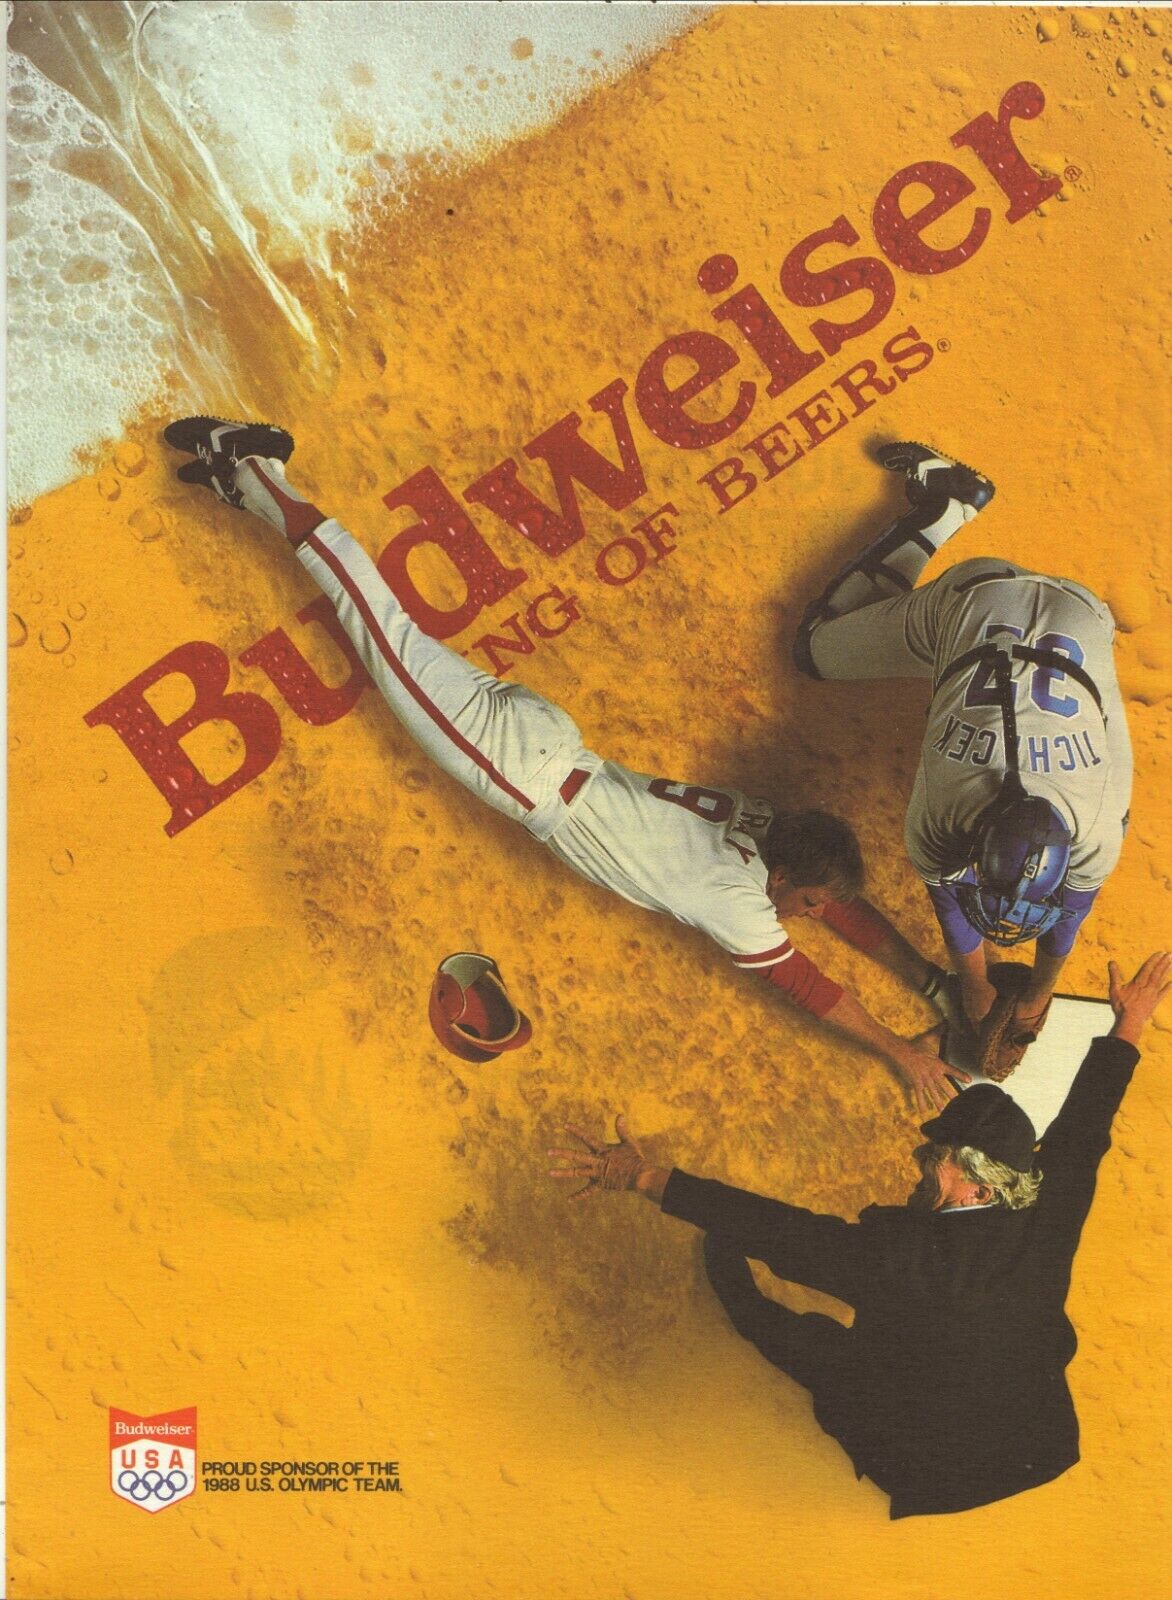 Budweiser--Baseball--King of Beers--1988 Print Ad